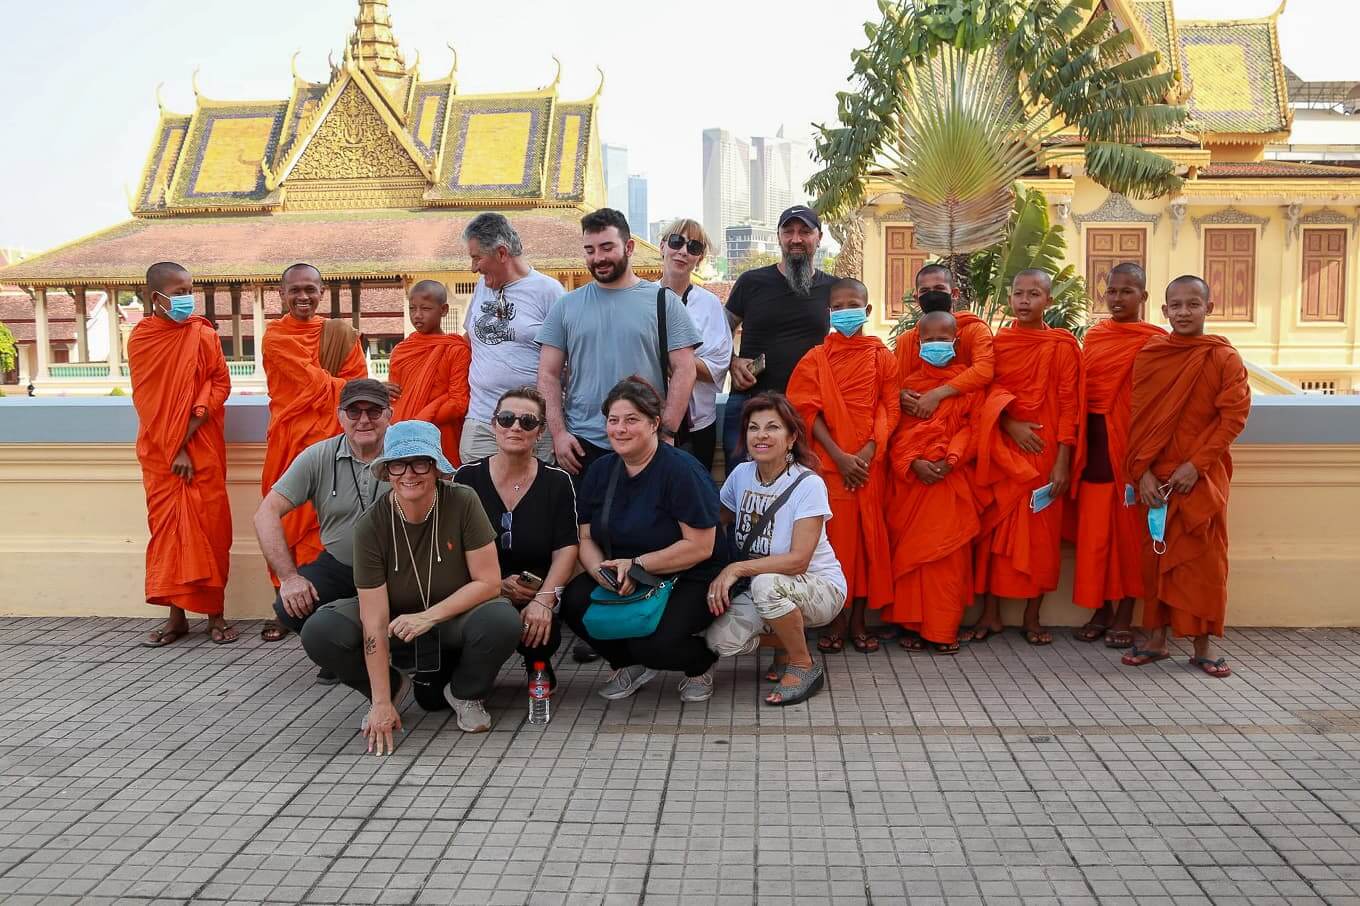 Best-of-Cambodia-8-days-Phnom-Penh-Royal-Palace-1.jpg